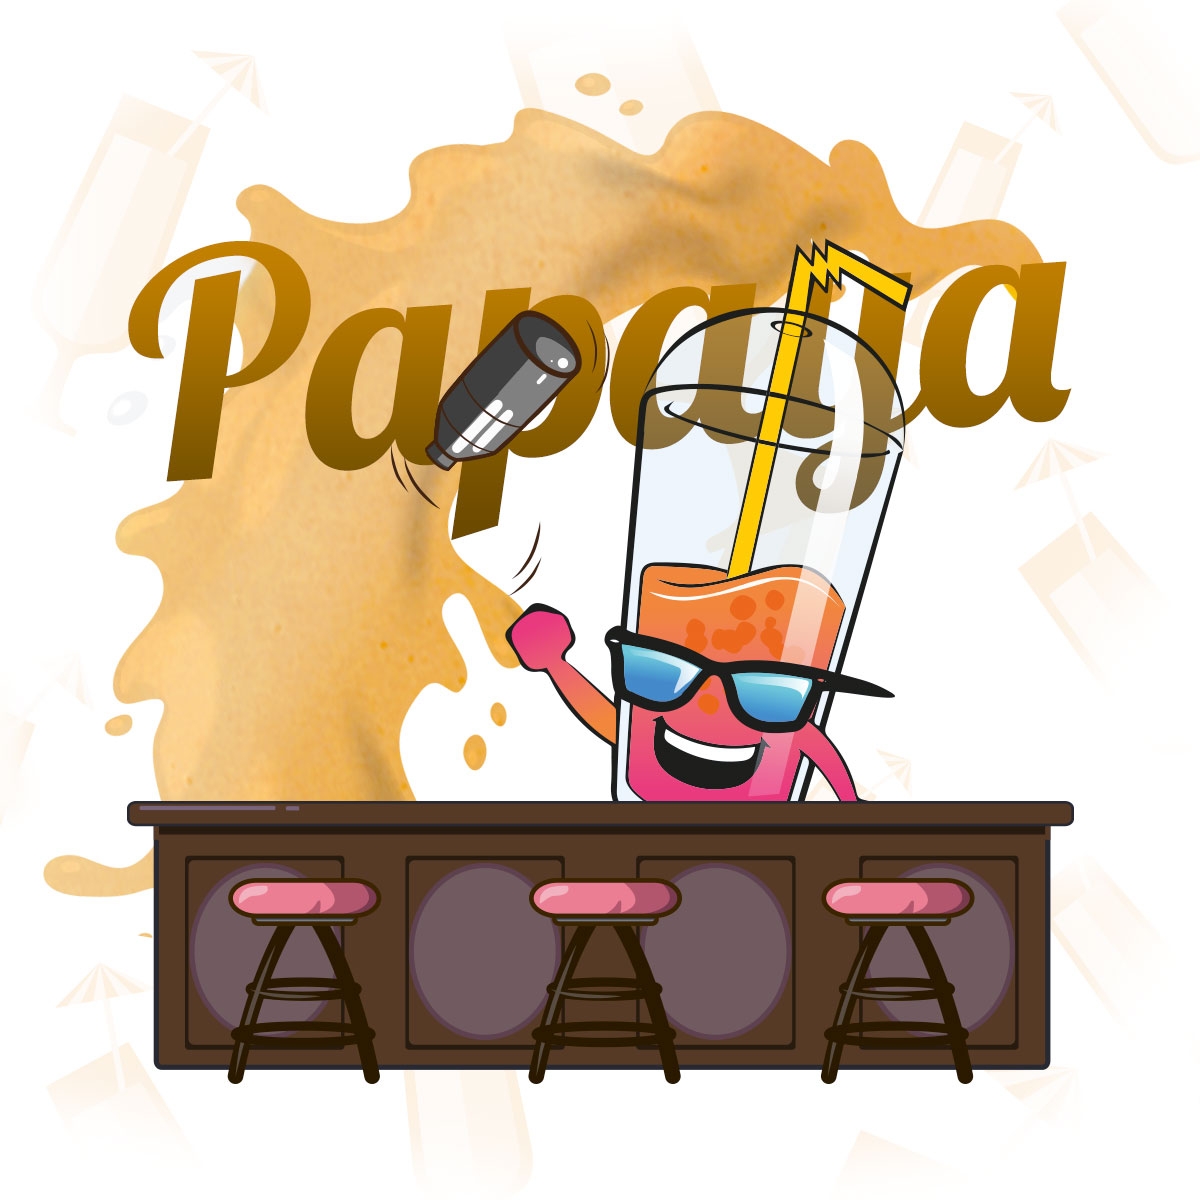 Papaya Pleasure / Papaya Playa